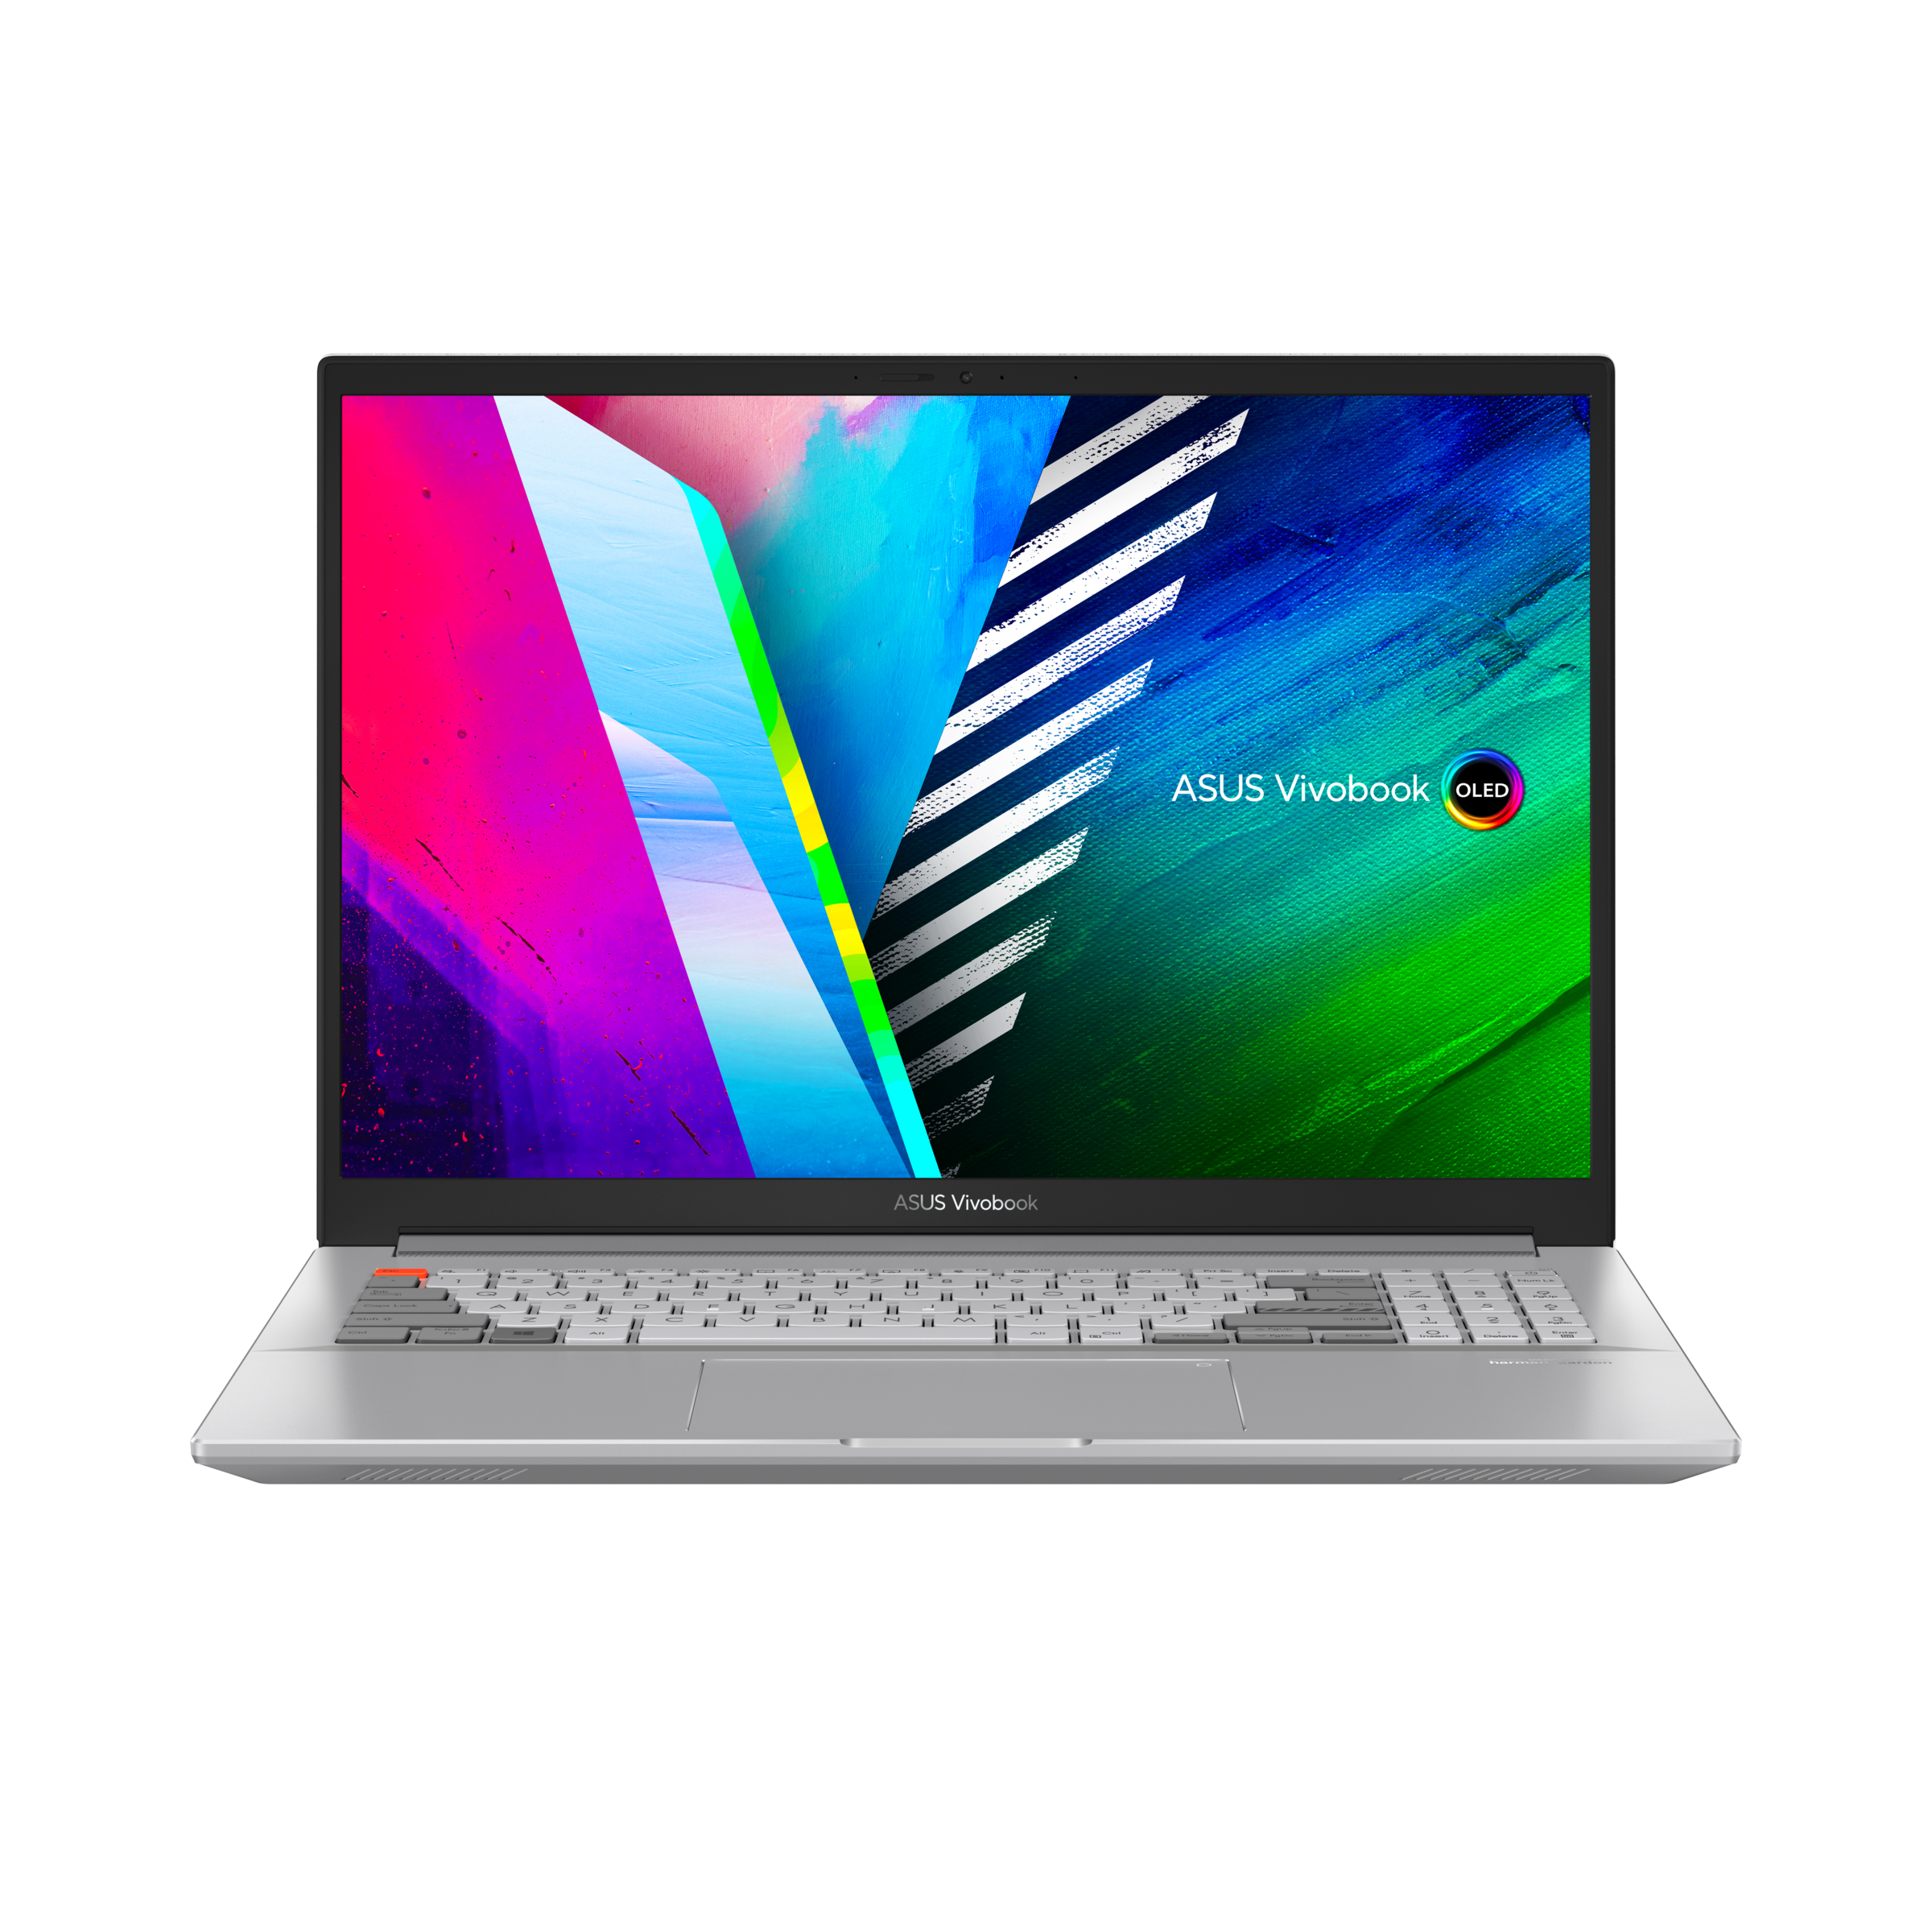 ASUS Vivobook Pro 16X OLED (M7600) Review — A Wallet-friendly Content  Creator Laptop? –